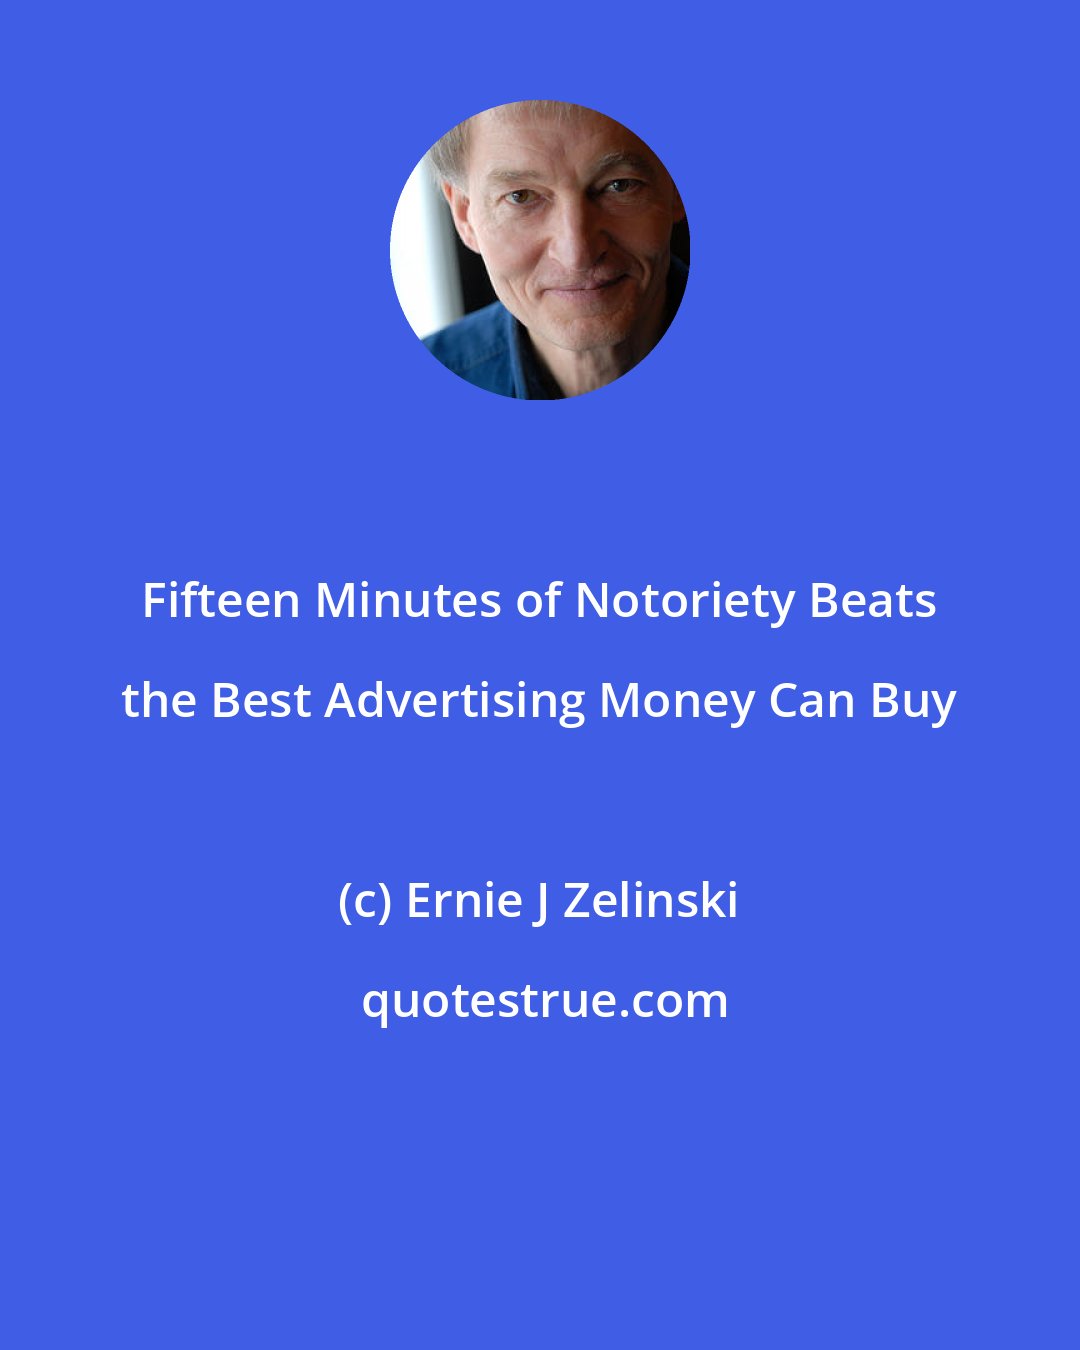 Ernie J Zelinski: Fifteen Minutes of Notoriety Beats the Best Advertising Money Can Buy